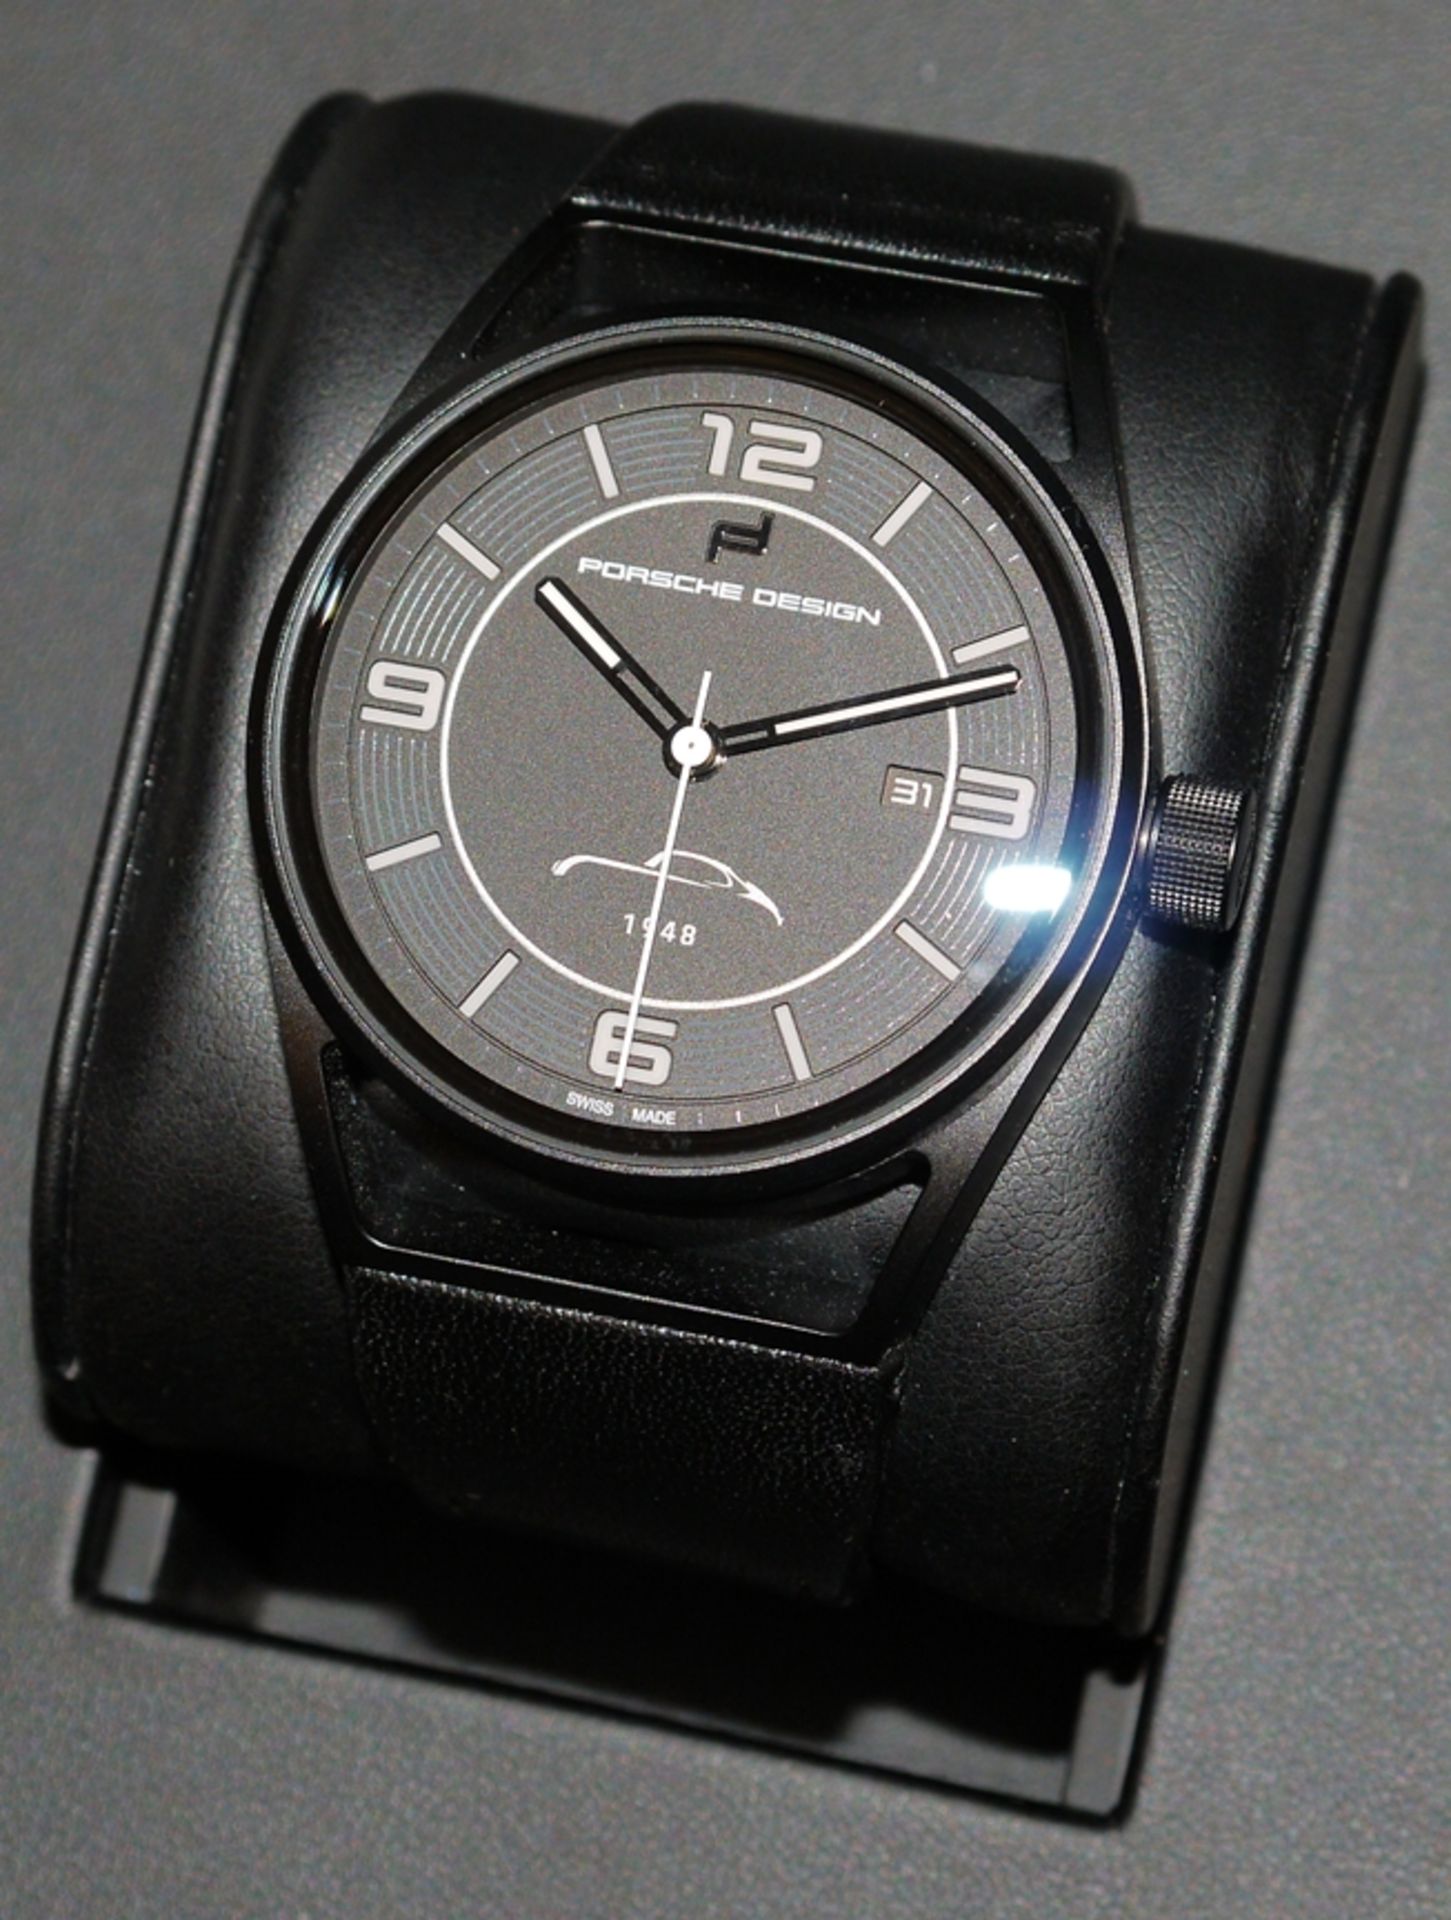 Porsche Design 1919 Datetimer Eternity, limited edition men's wristwatch with accessories - Image 2 of 2